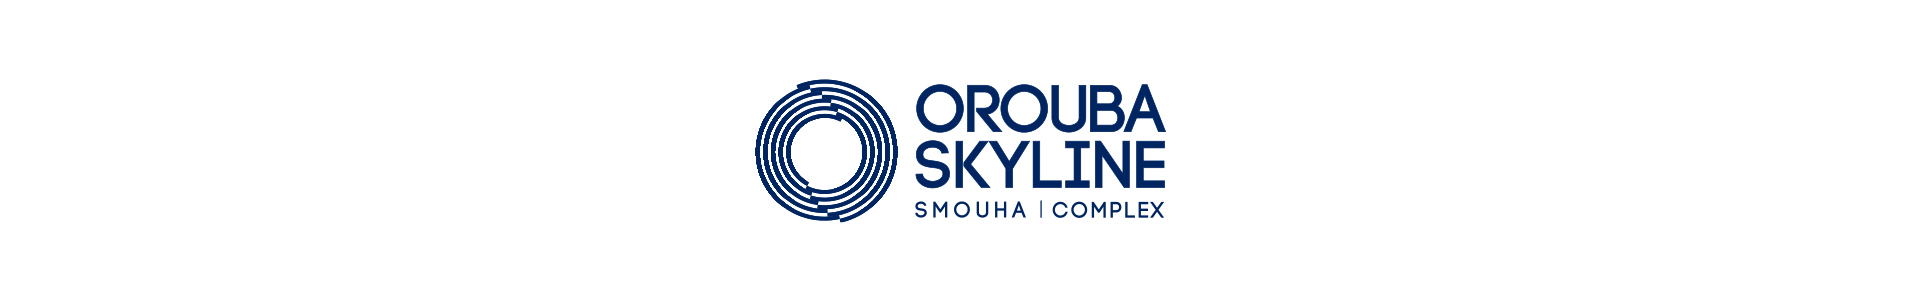 artlink advertising Communication Orouba Skyline